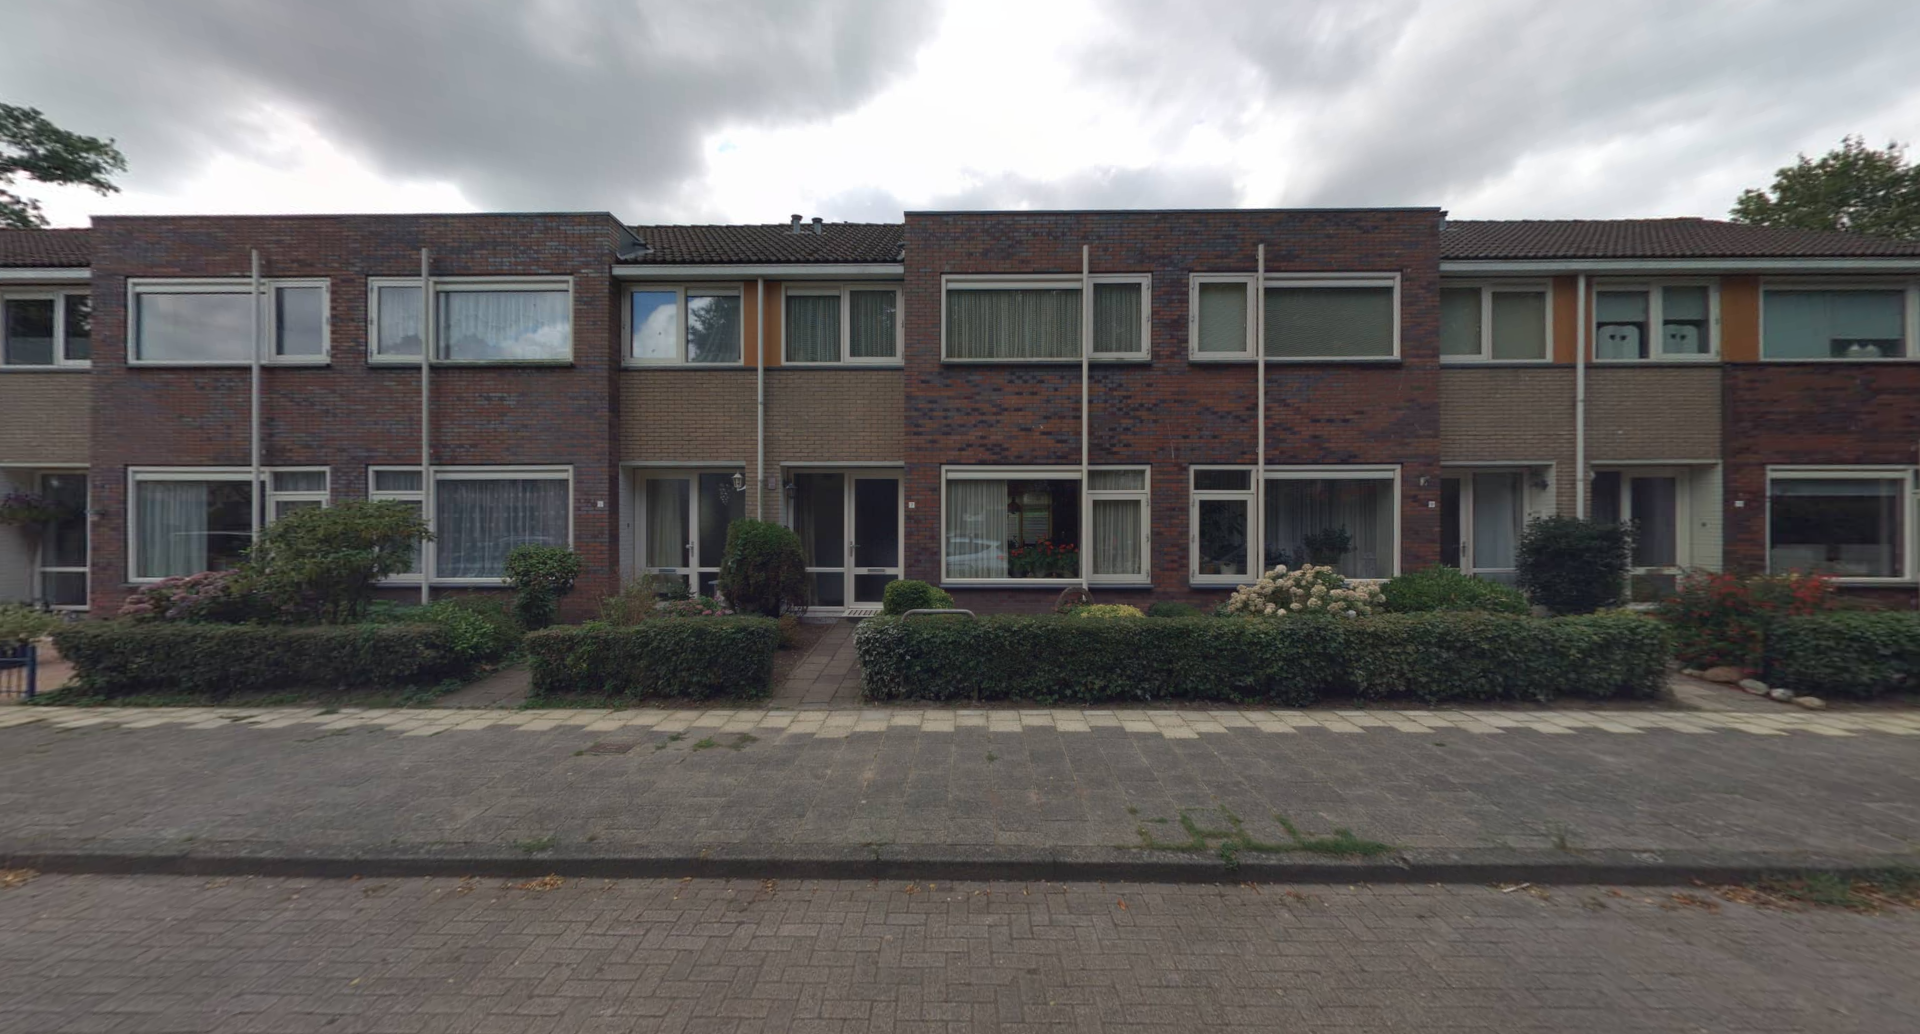 Smetanalaan 7, 9402 XA Assen, Nederland